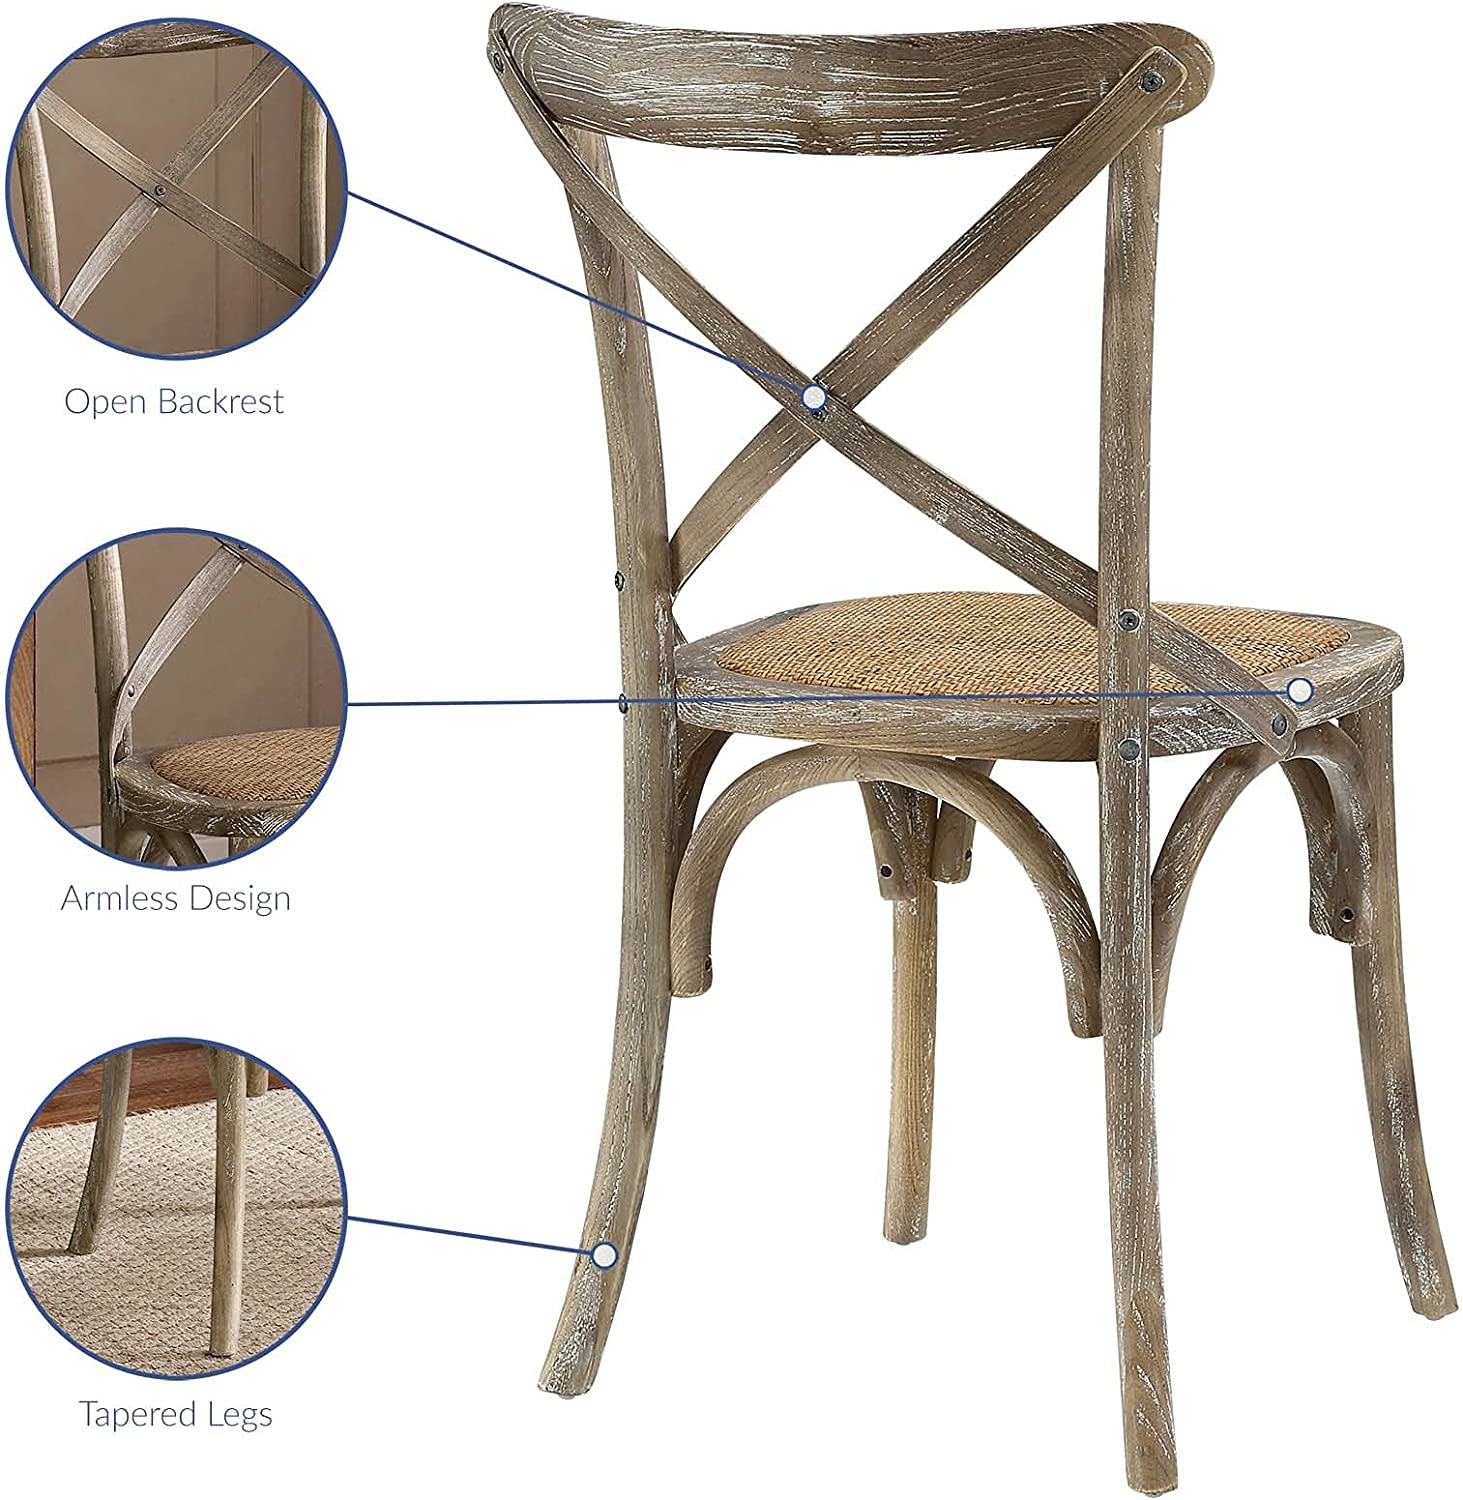 Modway Gear Rustic Modern Farmhouse Elm Wood Rattan Dining Chair in Gray